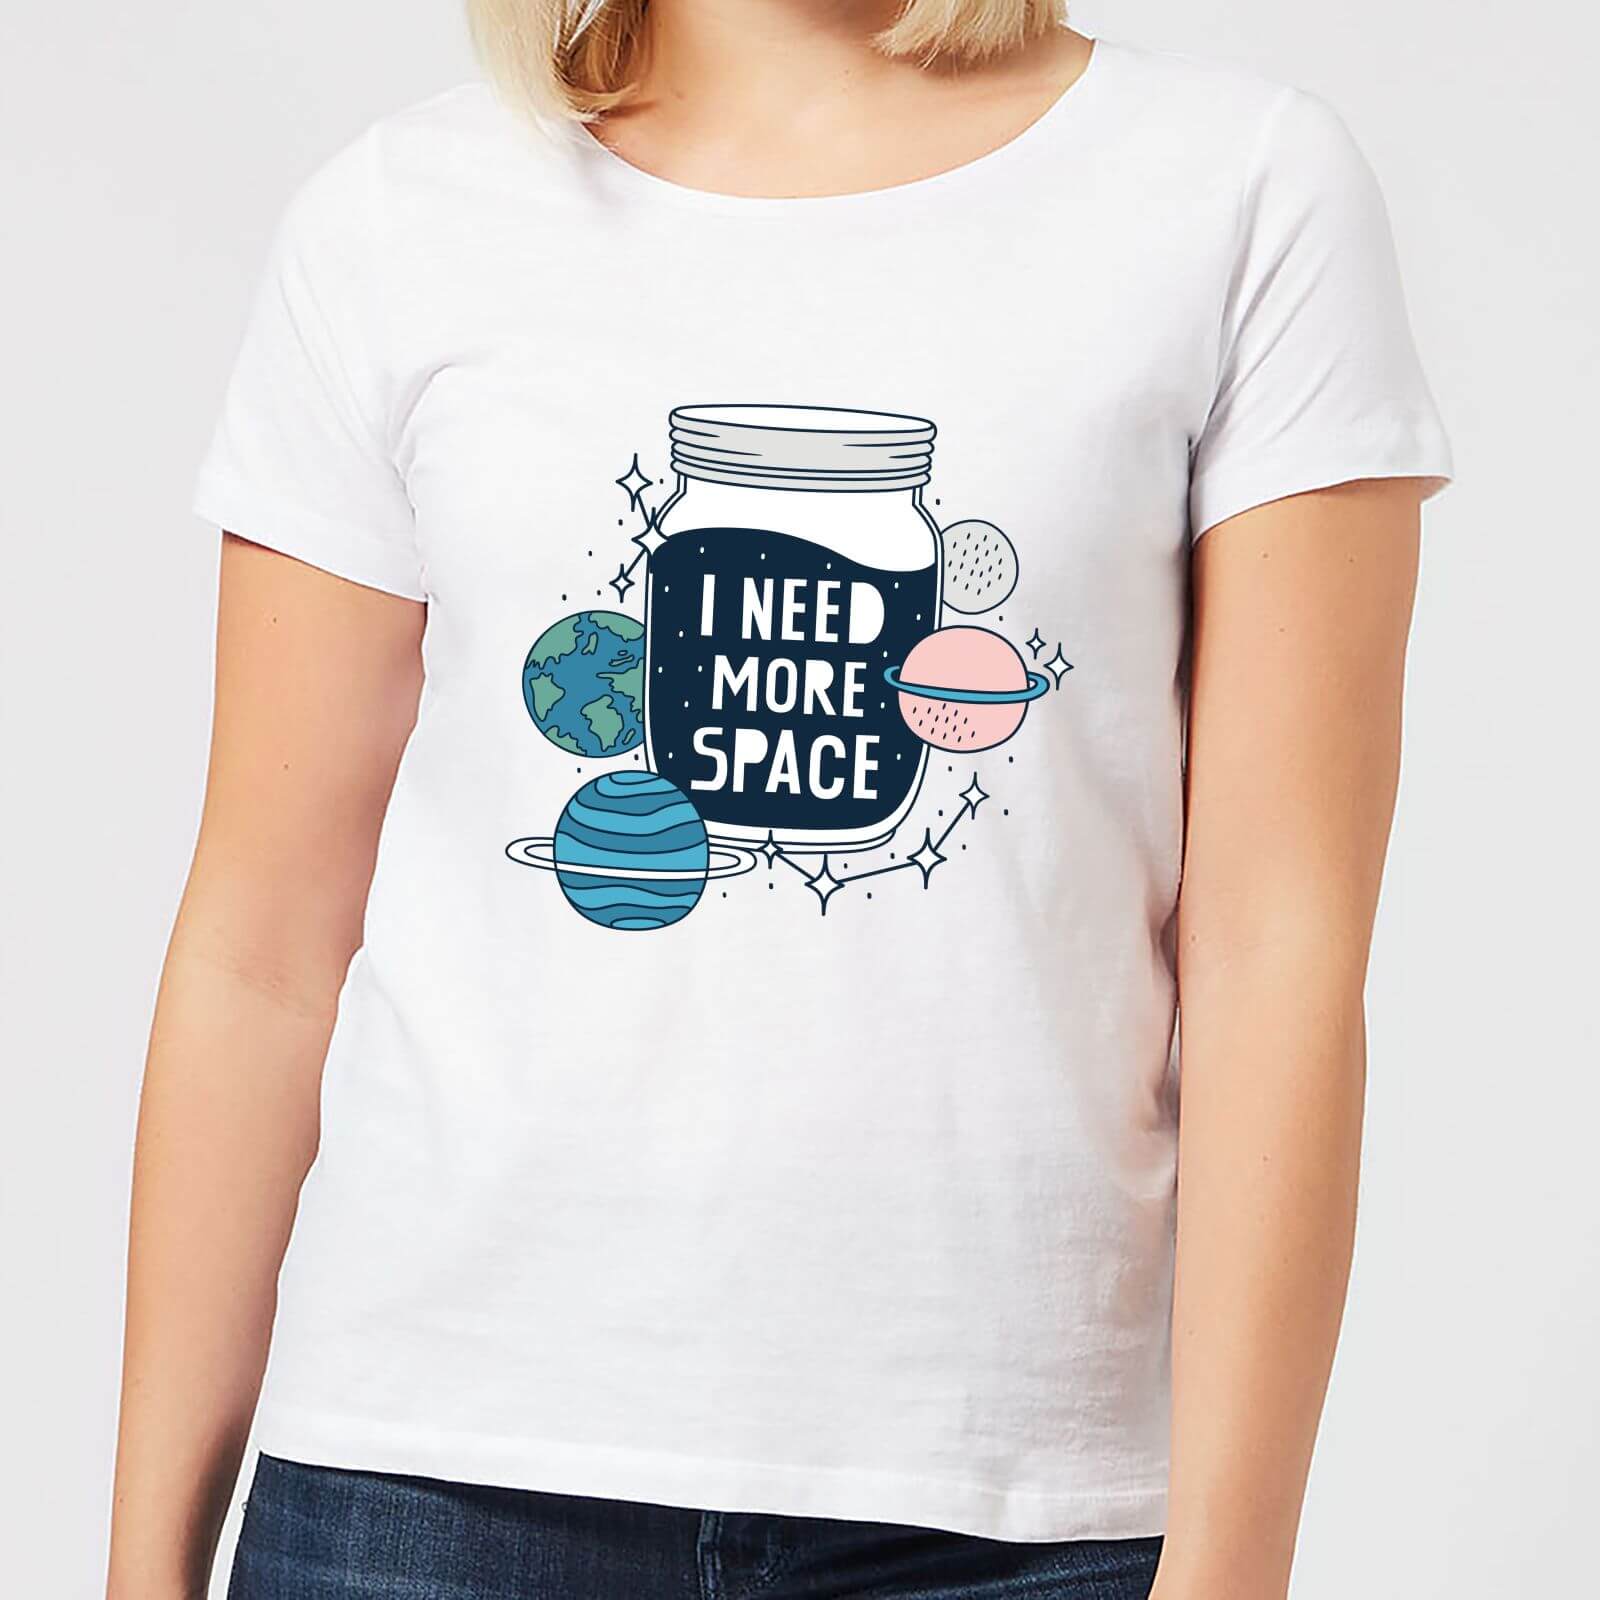 I Need More Space Women's T-Shirt - White - S - White